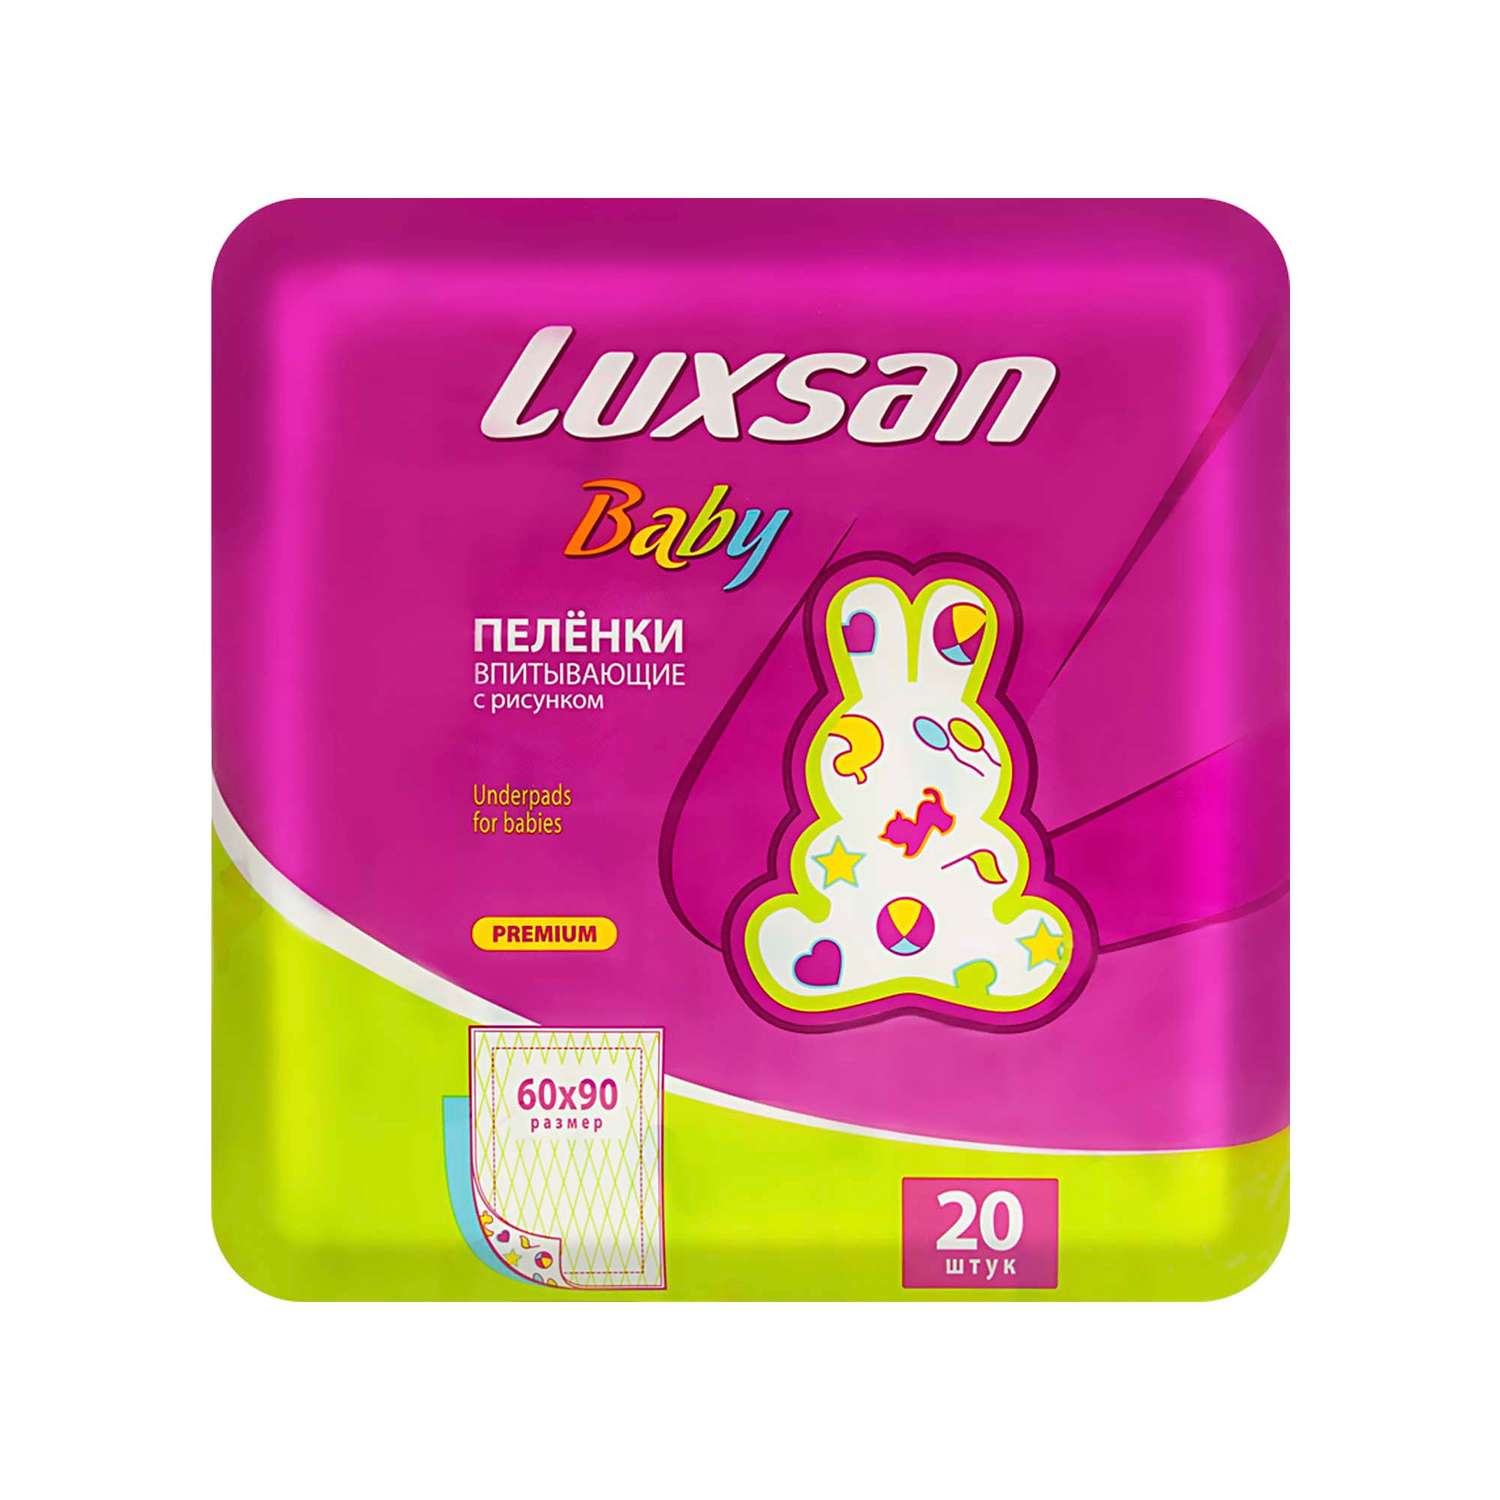 Пеленки впитывающие Luxsan Baby с рисунком 60х90 20 шт - фото 1